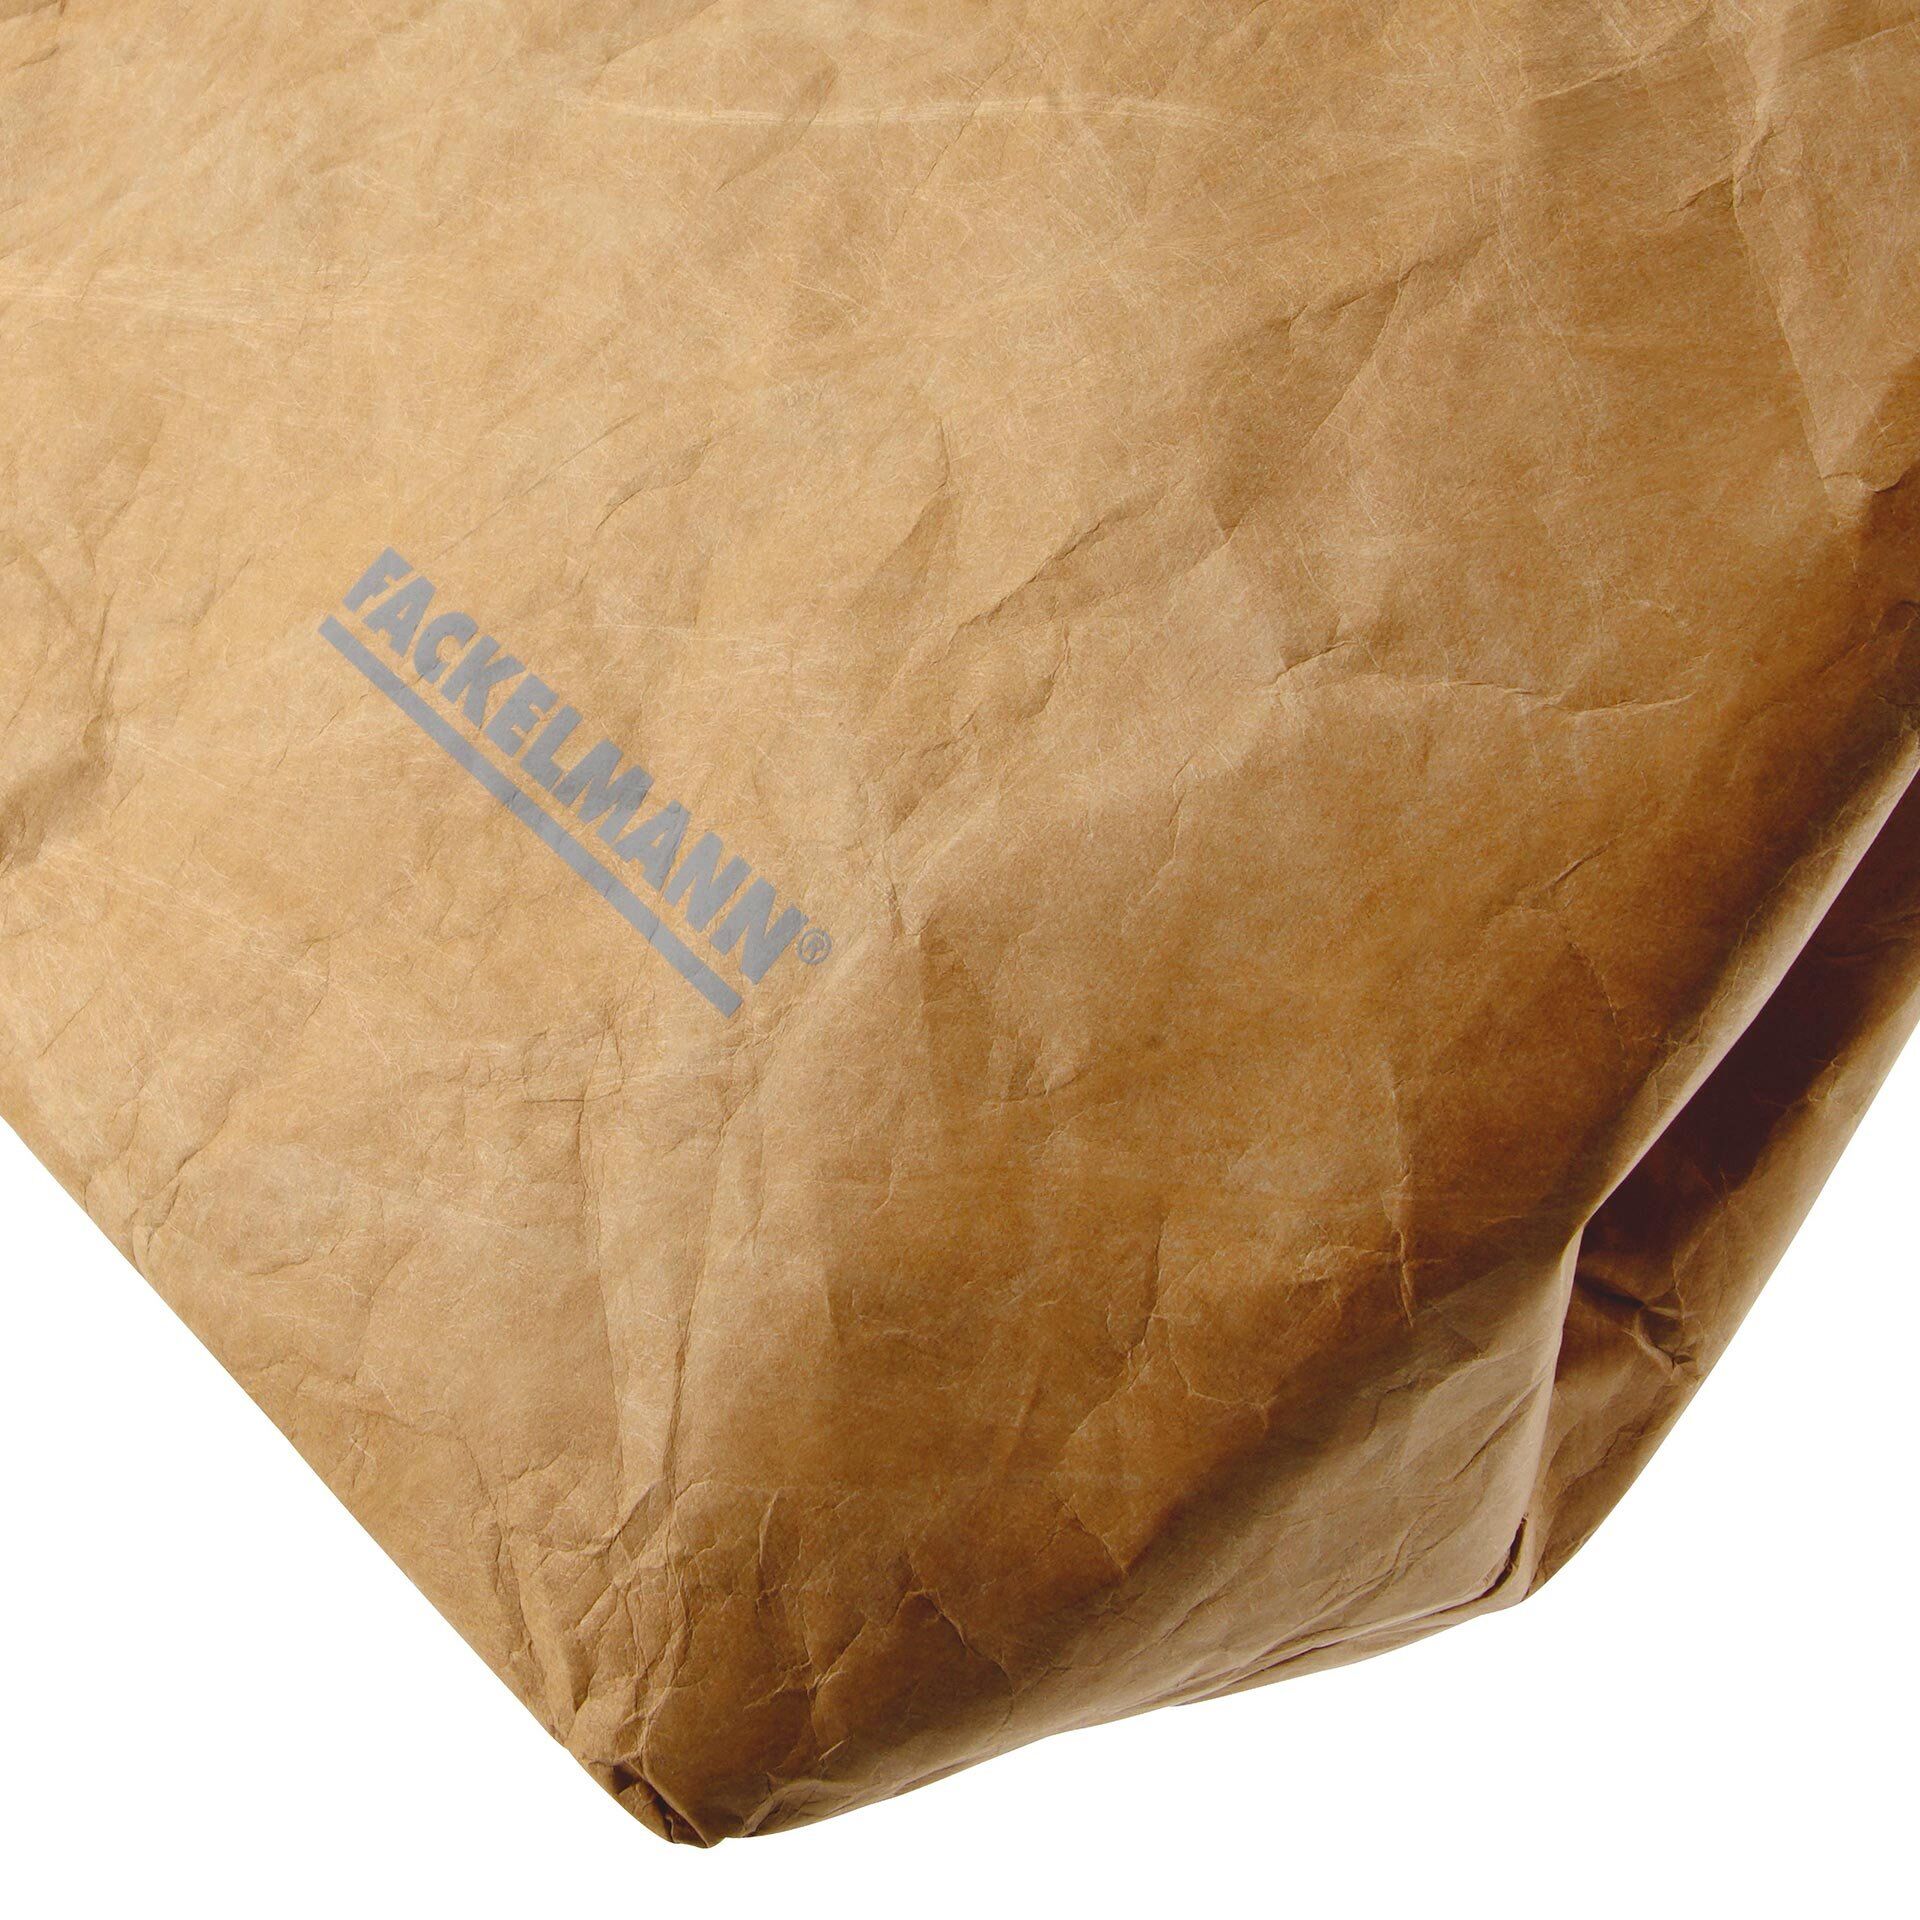 Lunchbag isoliert, Papierlook, groß